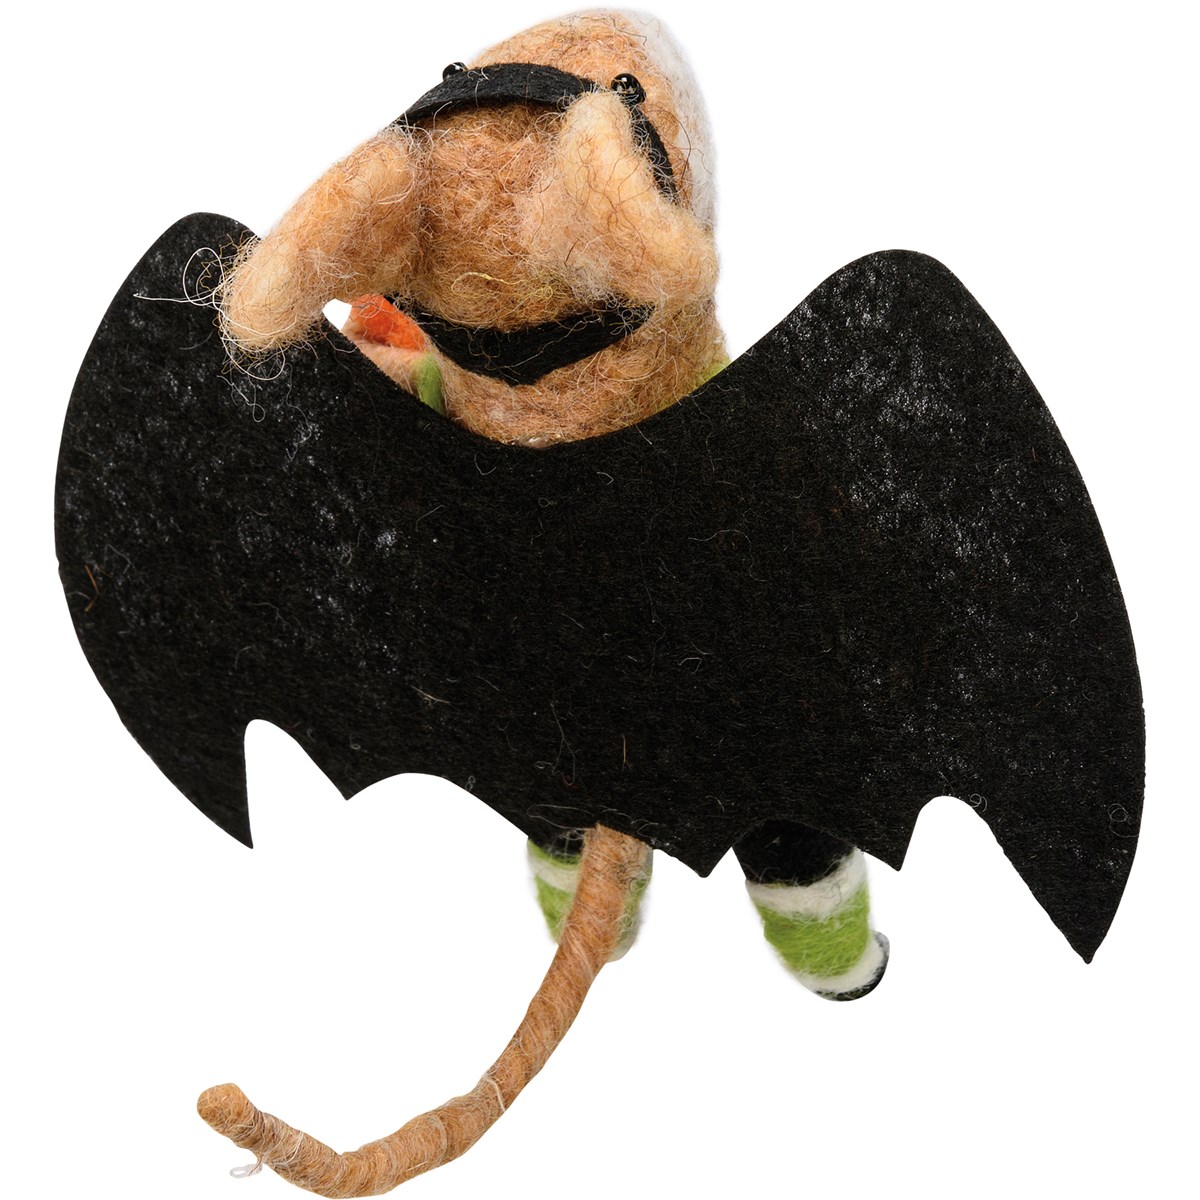 Critter - Bat Mouse - 4" x 4" x 3.50" - Felt, Plastic